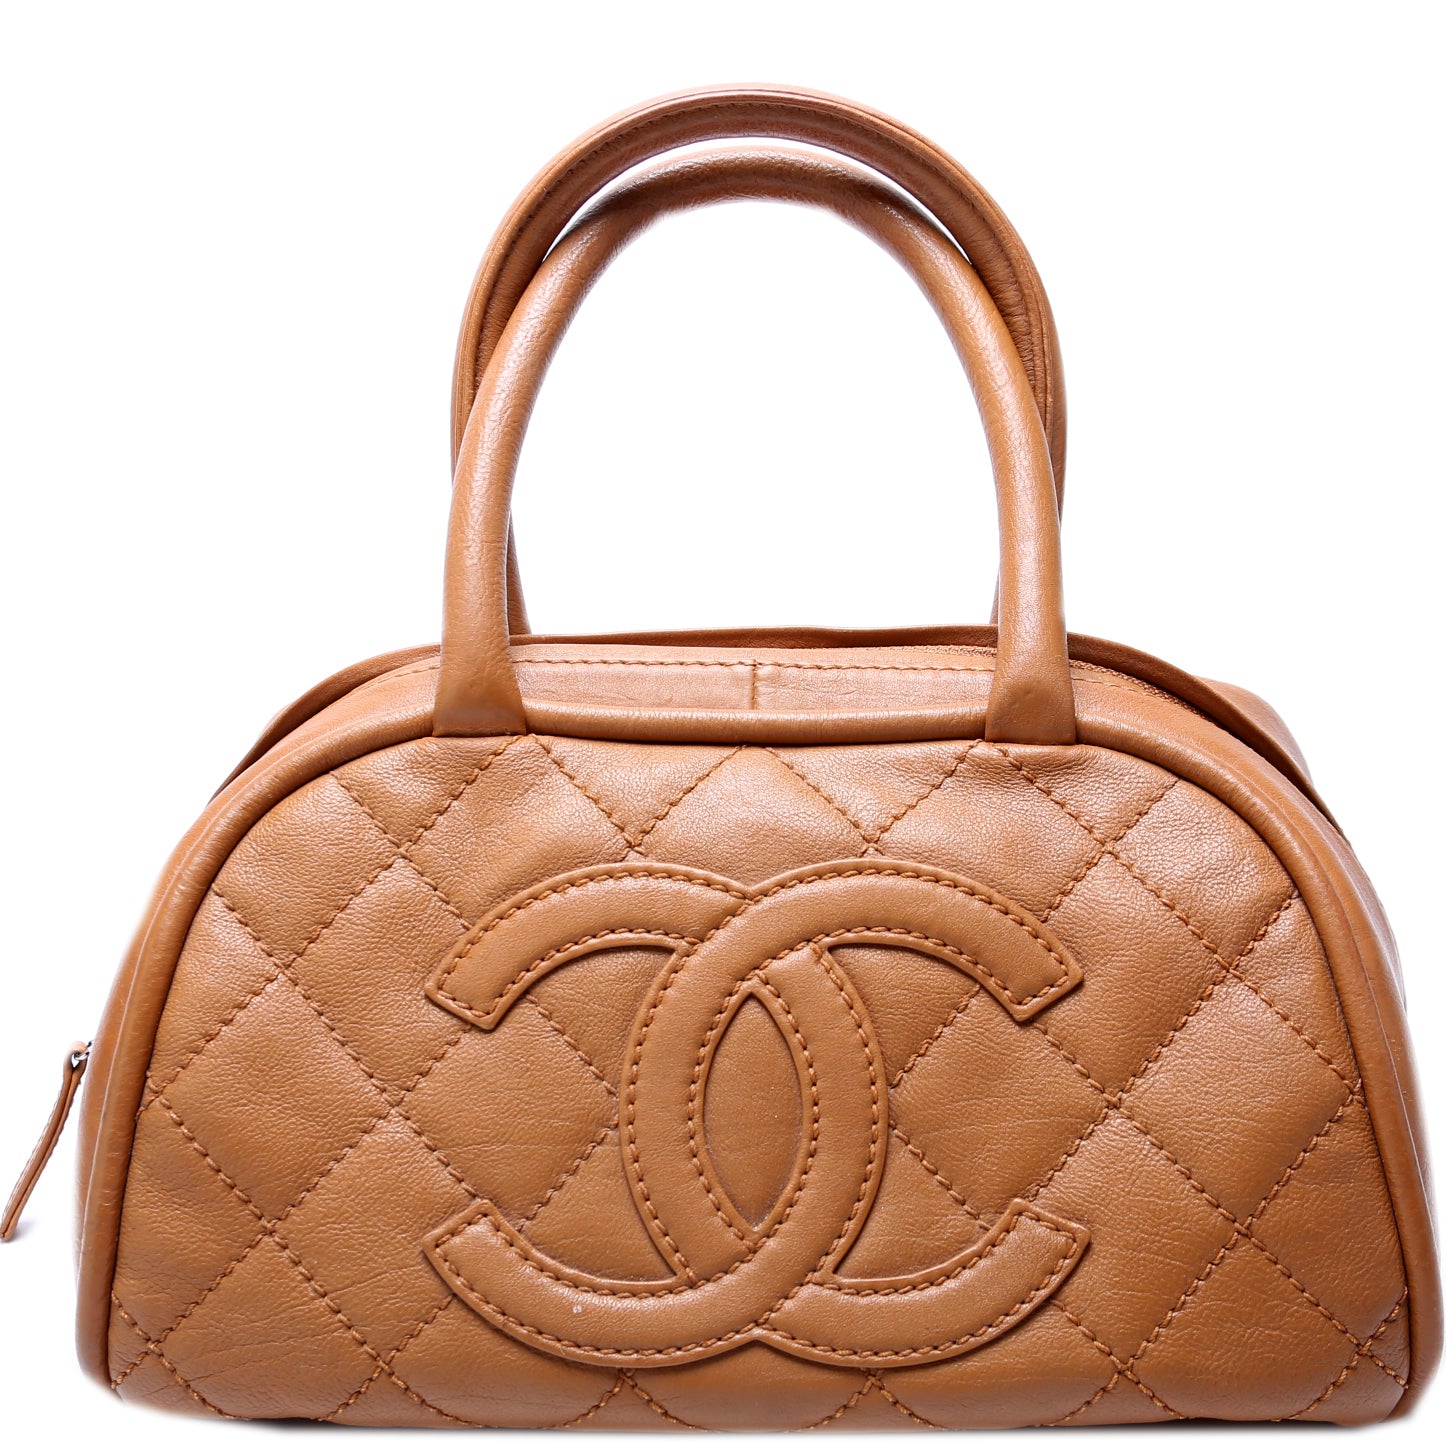 Chanel Vintage Logo Bowler Bag Quilted Lambskin Large